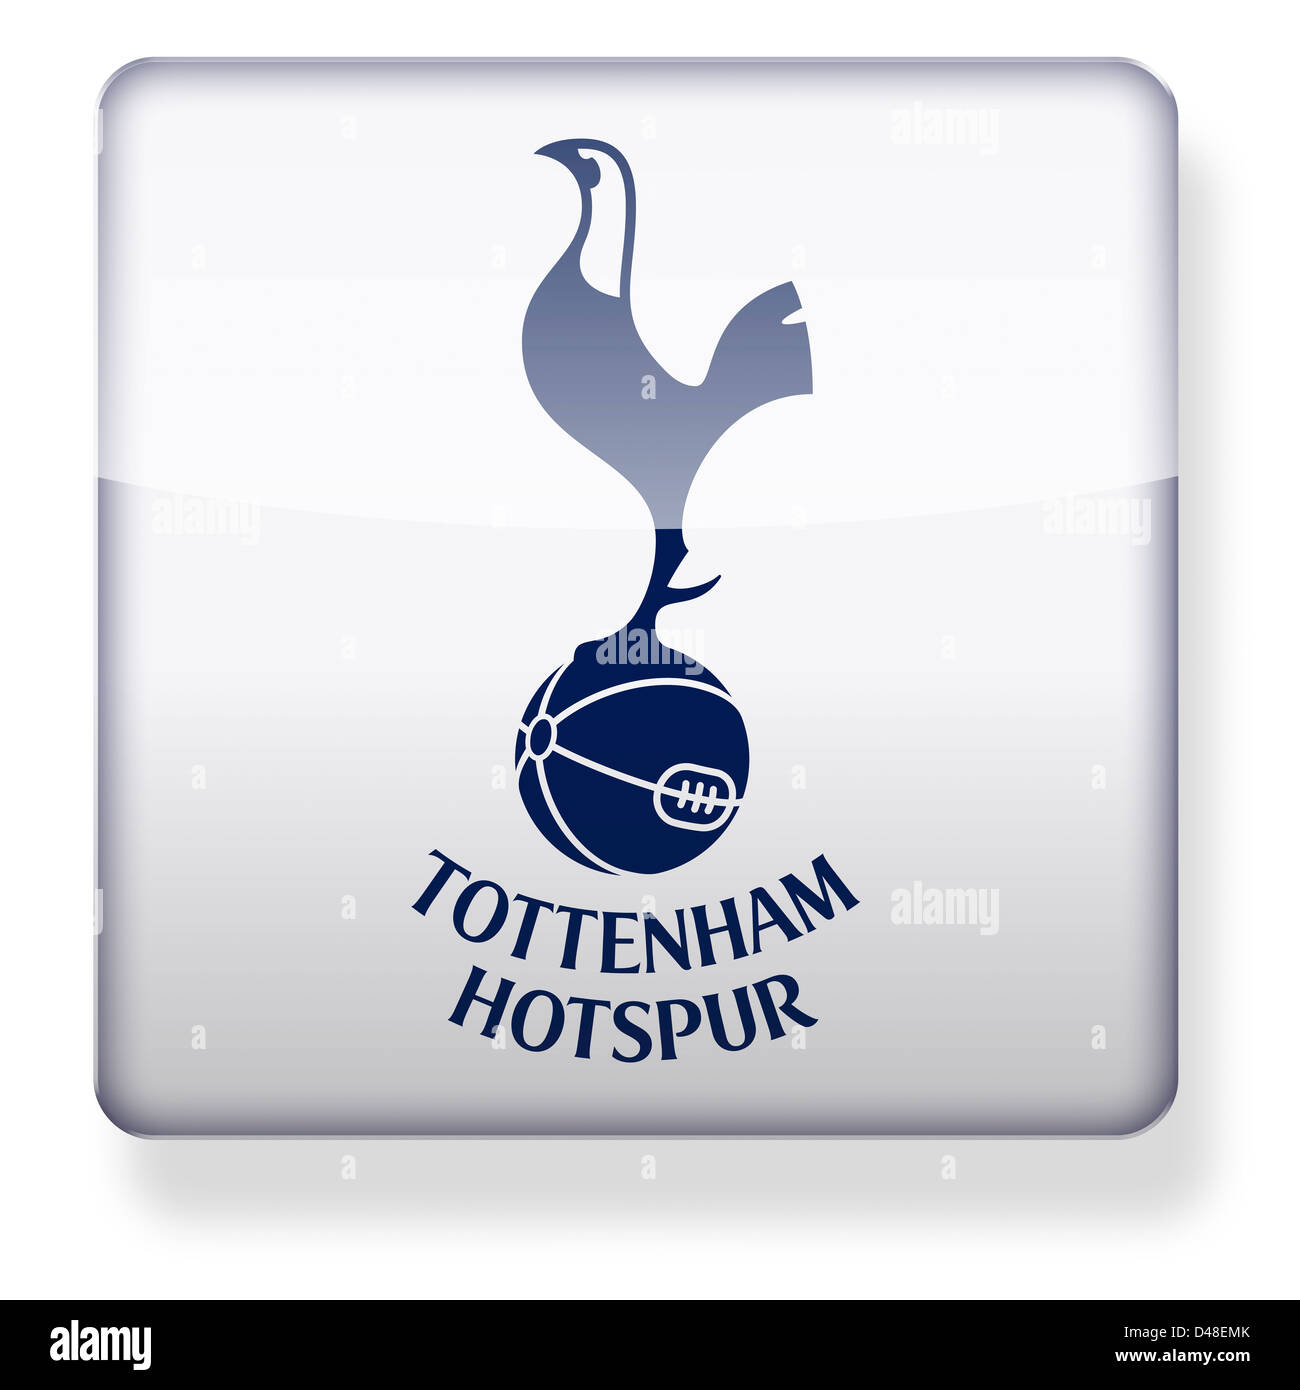 Tottenham Hotspur football club logo as an app icon. Clipping path included. Stock Photo